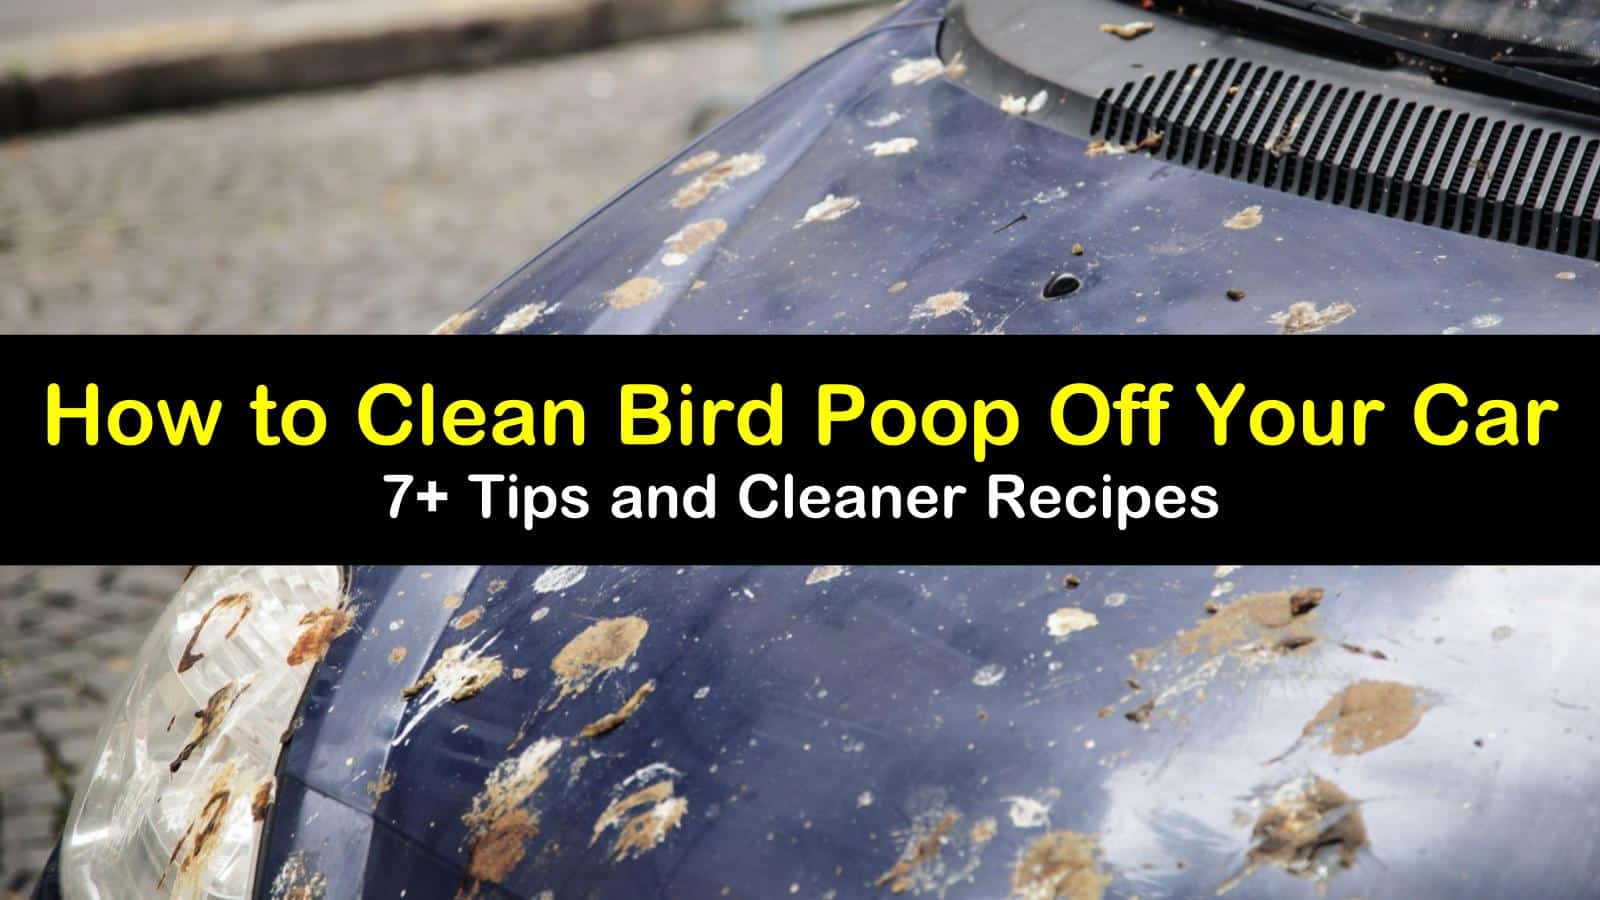 how to clean bird poop off a car titleimg1